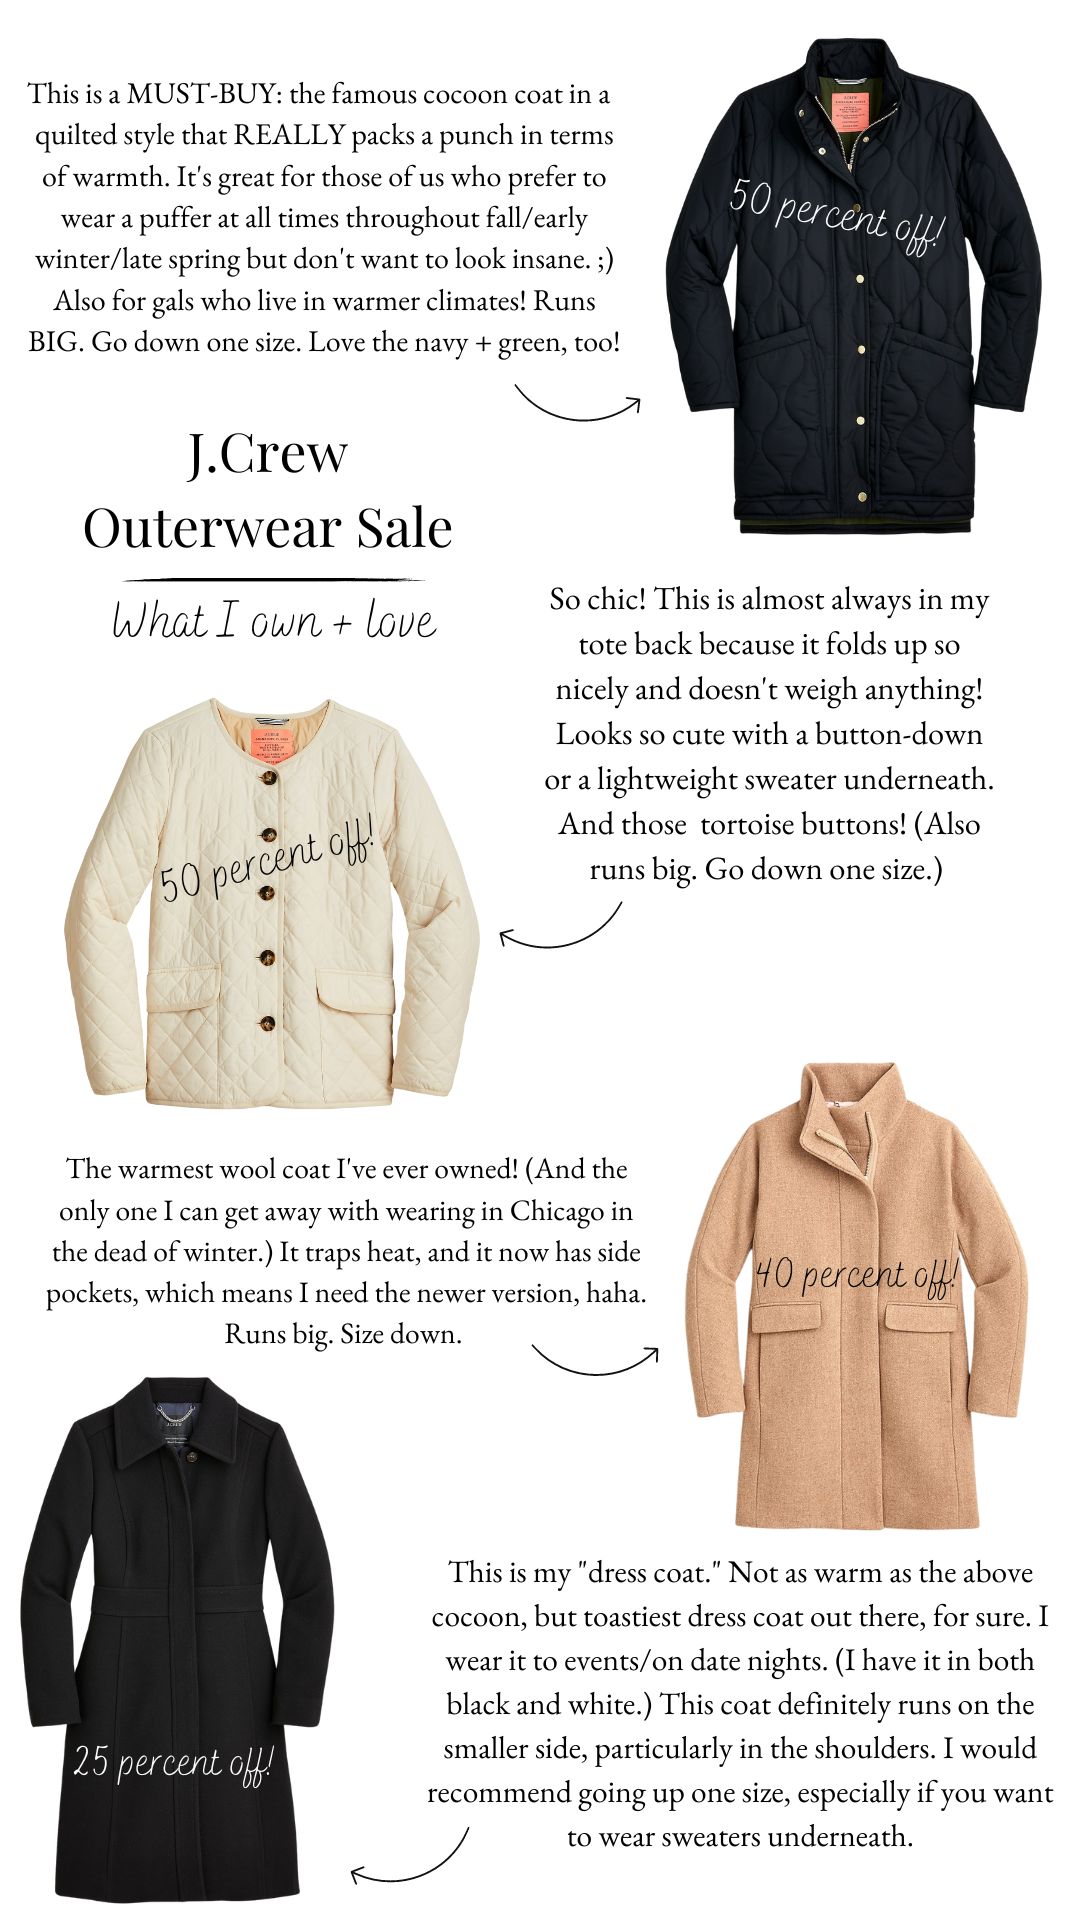 J.Crew outerwear sale